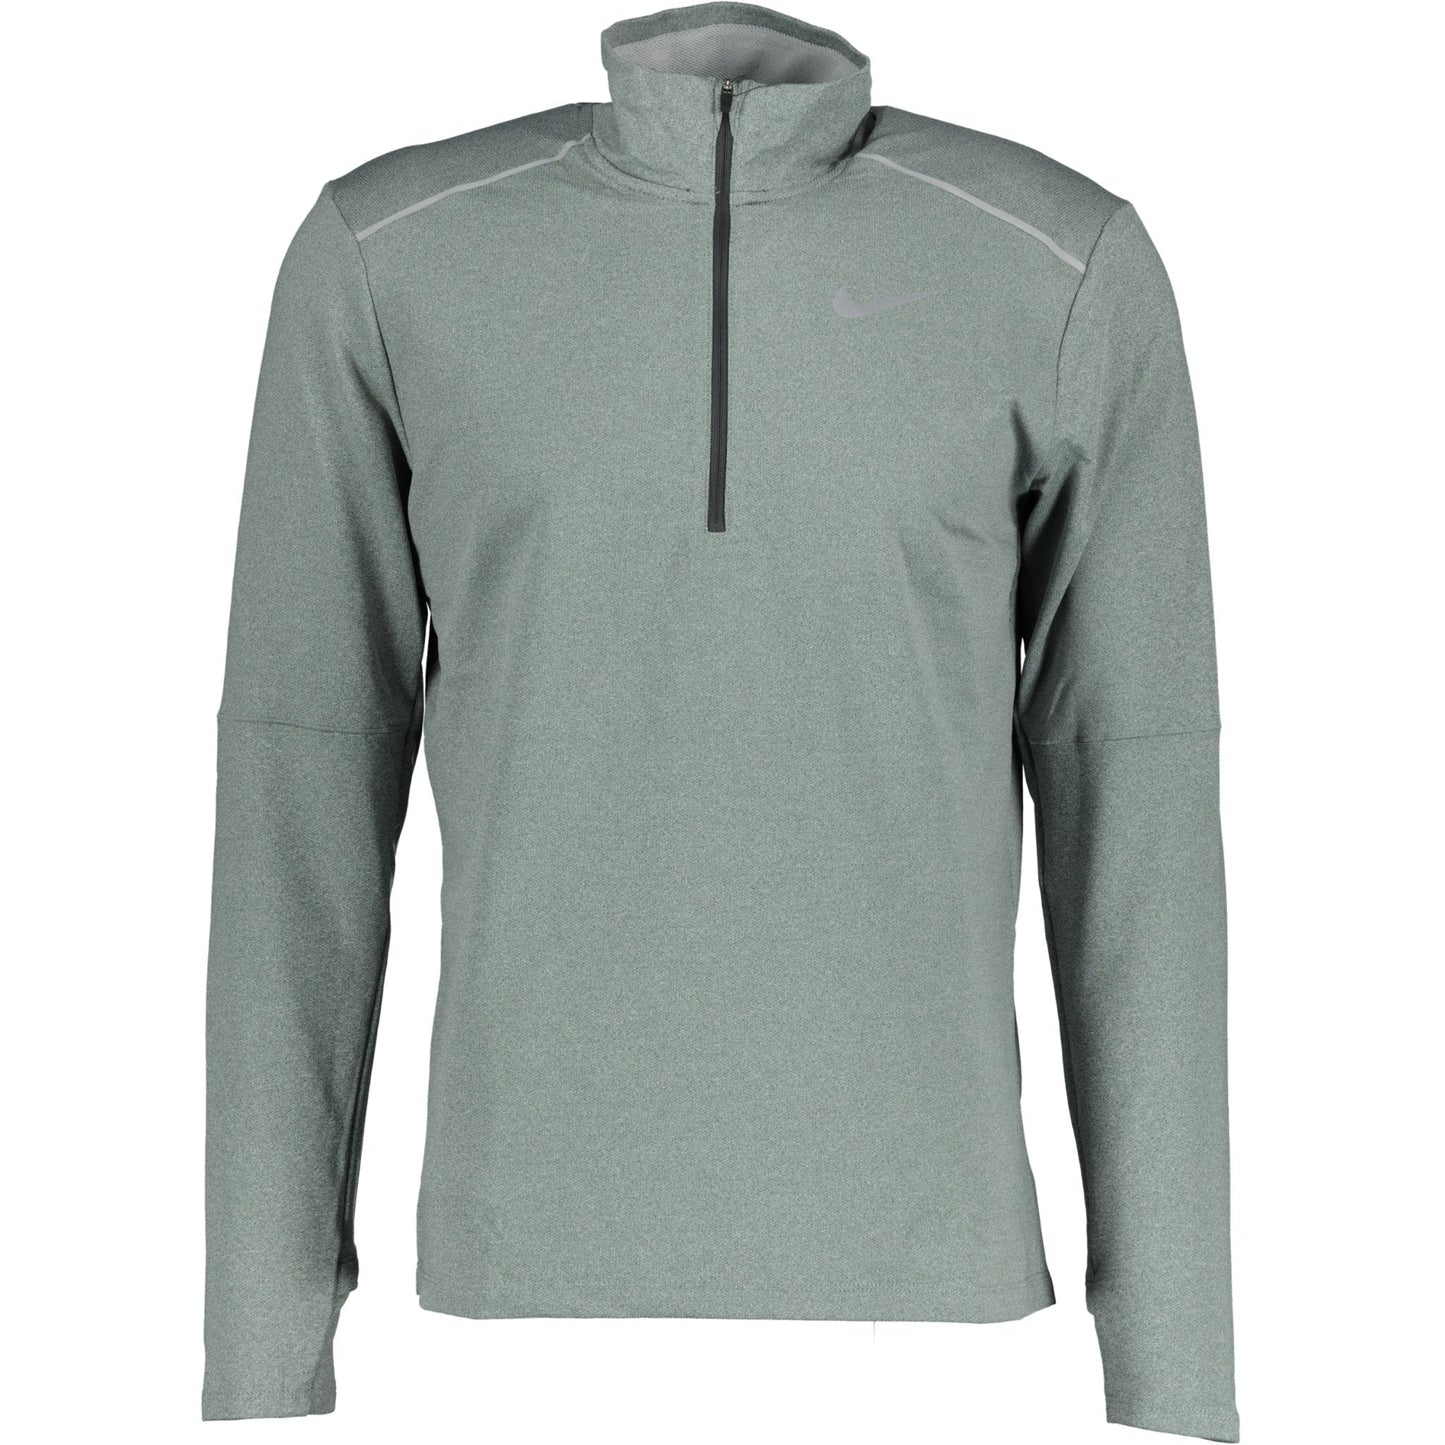 Nike Dri Fit Element Top Grey - LinkFashionco